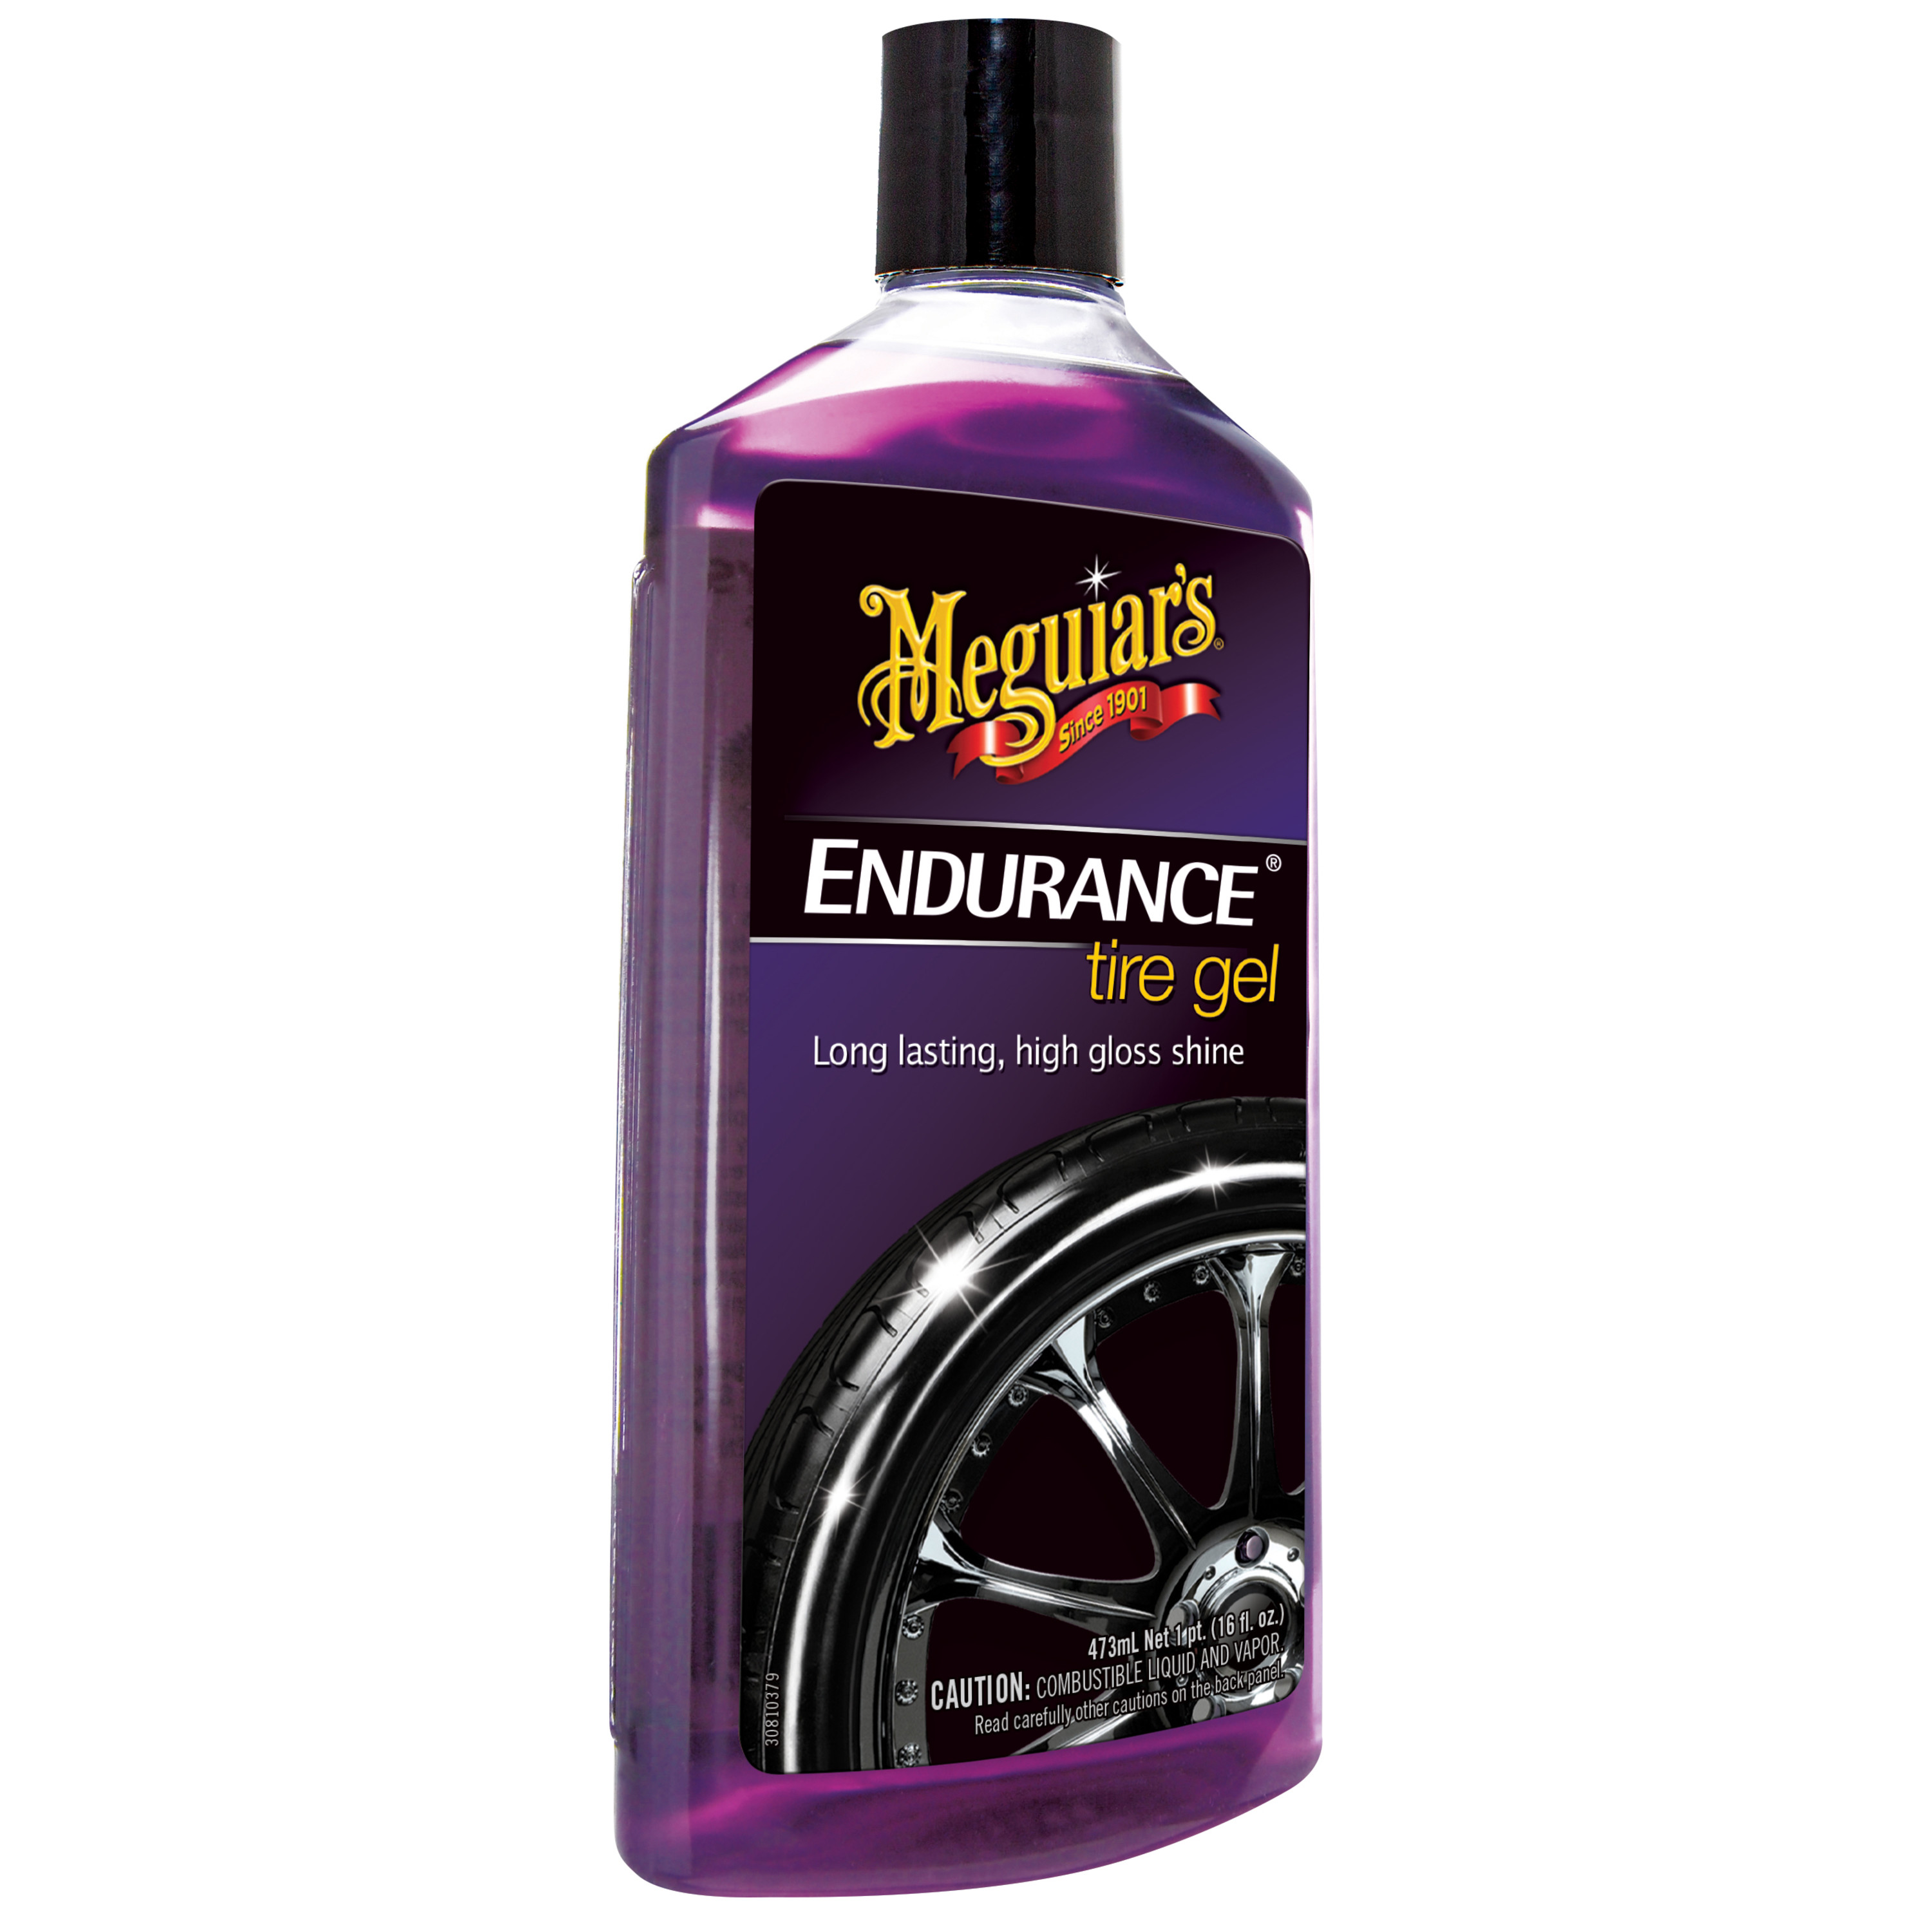 Meguiar's Endurance Tire Gel, Rich Purple Liquid, Glossy Shine - Tire Care, 16 Oz - image 1 of 9